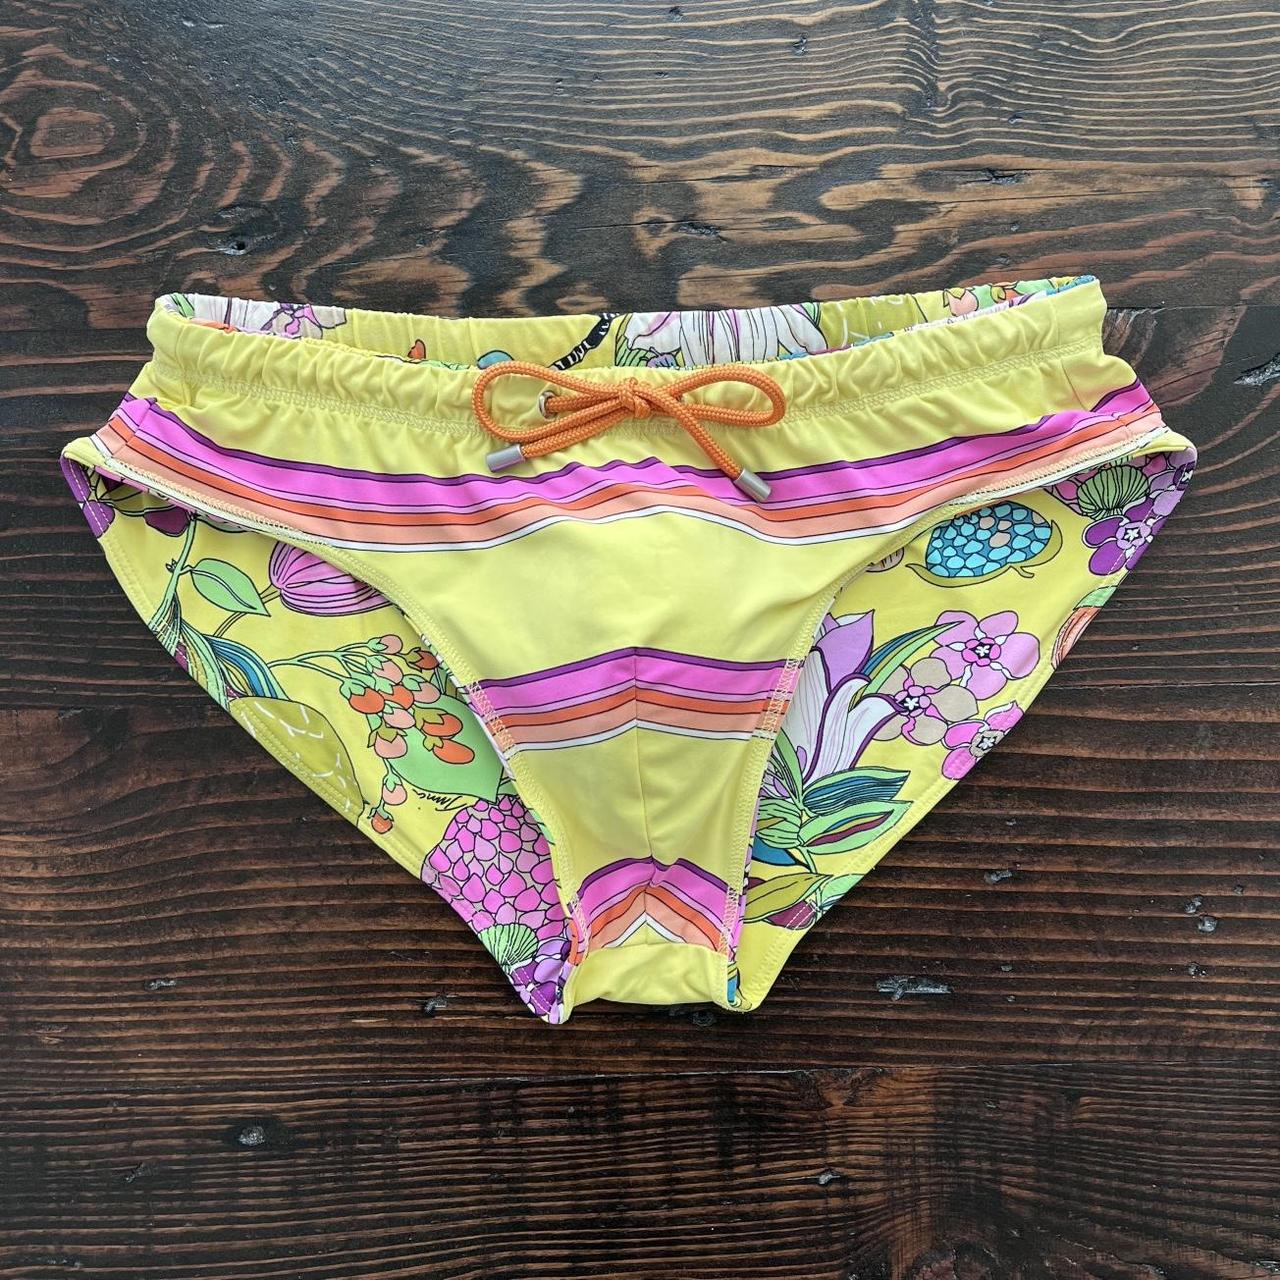 Speedo Men's Yellow and Pink Swim-briefs-shorts | Depop